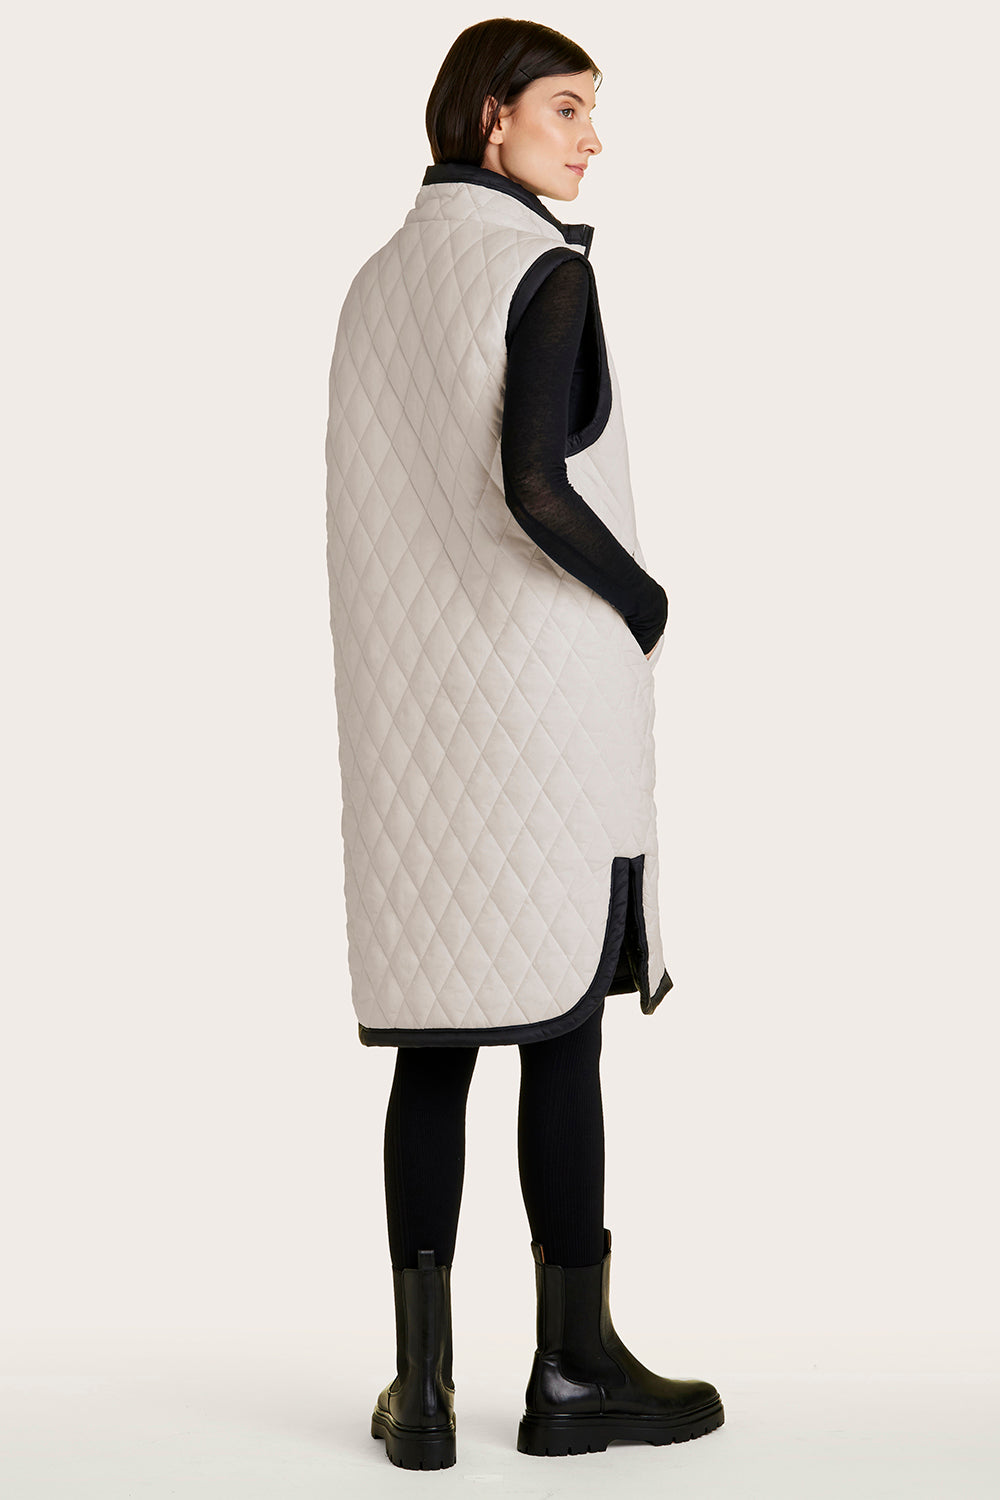 Alala women's long reversible vest in black and white